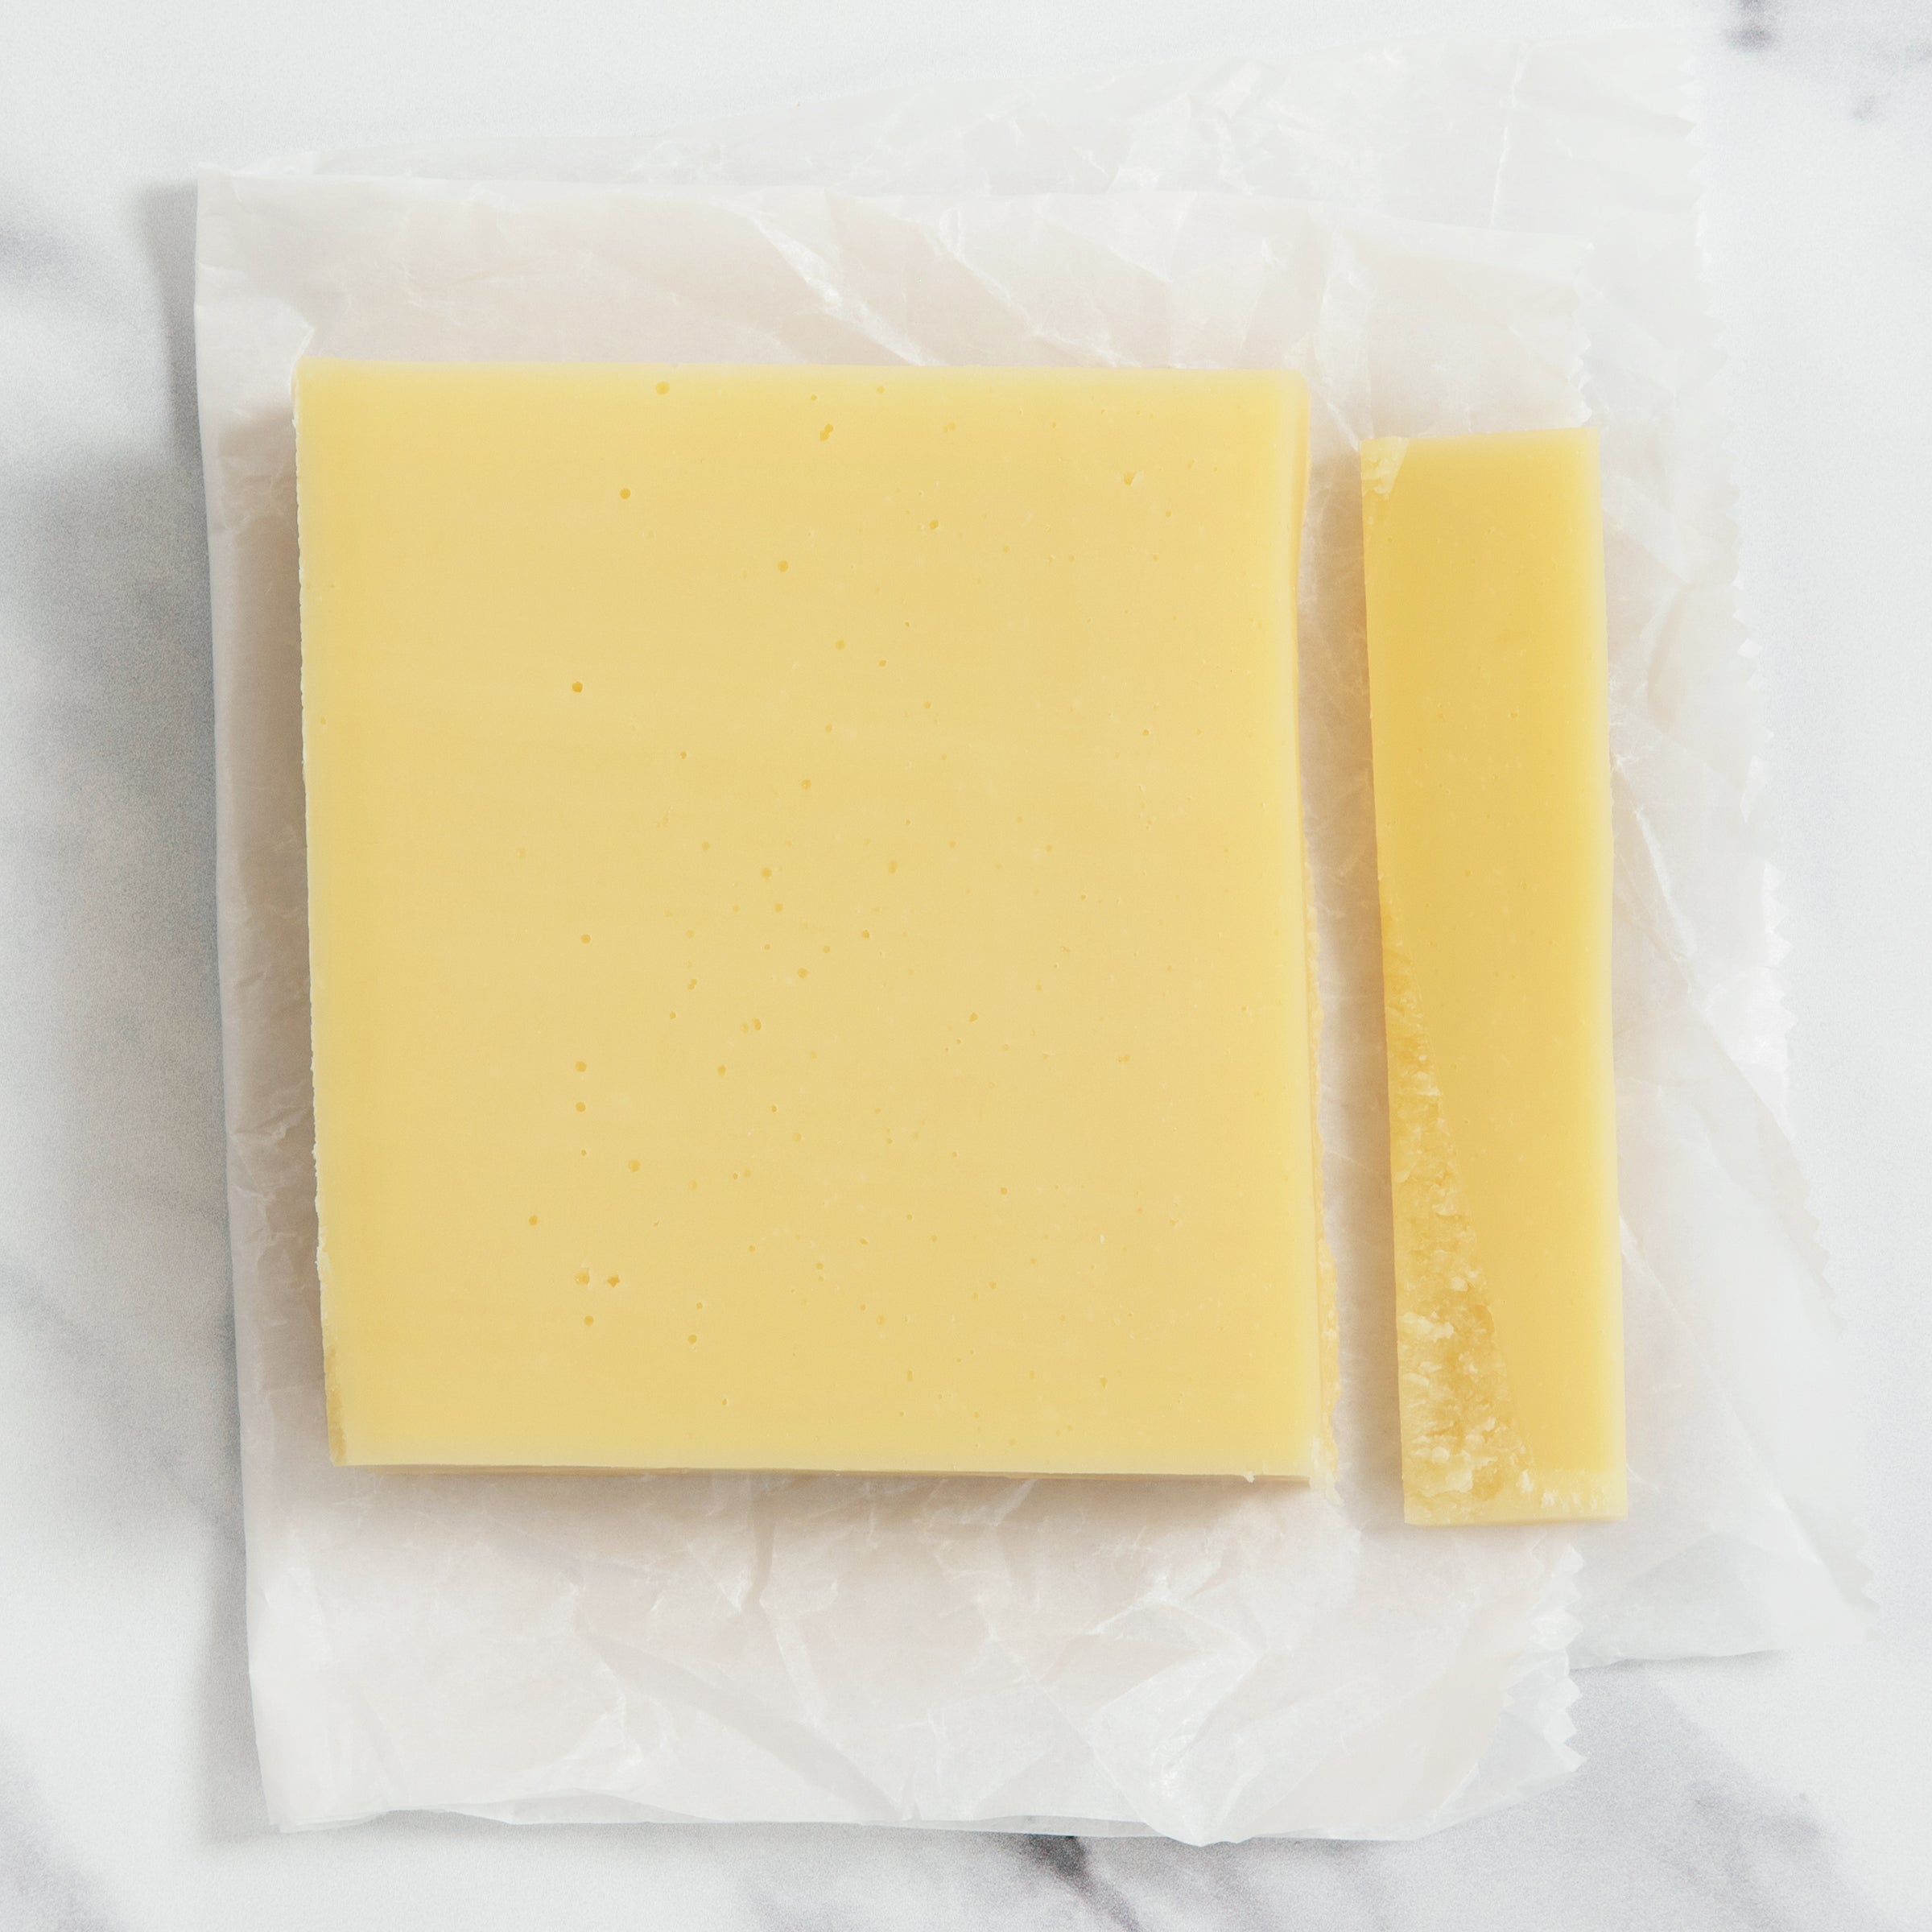 igourmet_1598s_Austrian Alps Gruyere cheese_Cheese